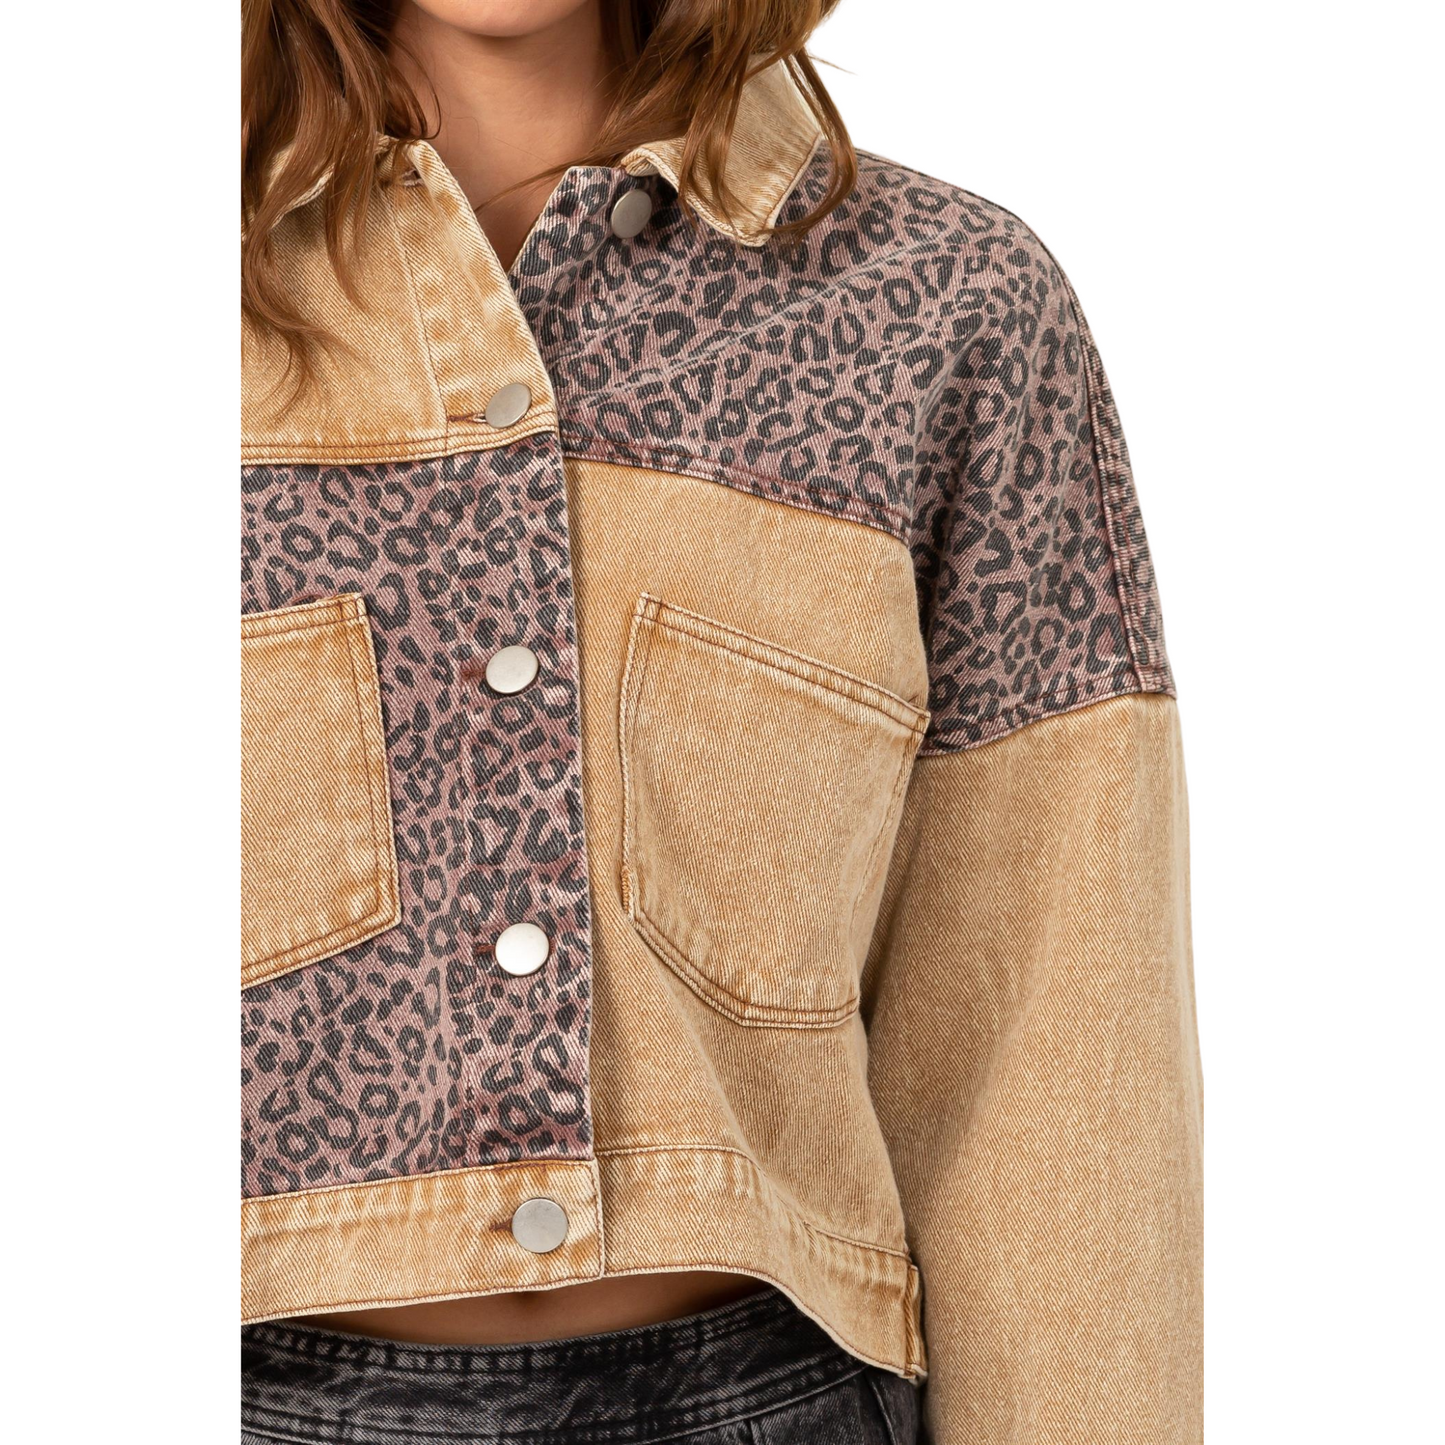 Hyfve Color Block Cheetah Denim Jacket (S-L)